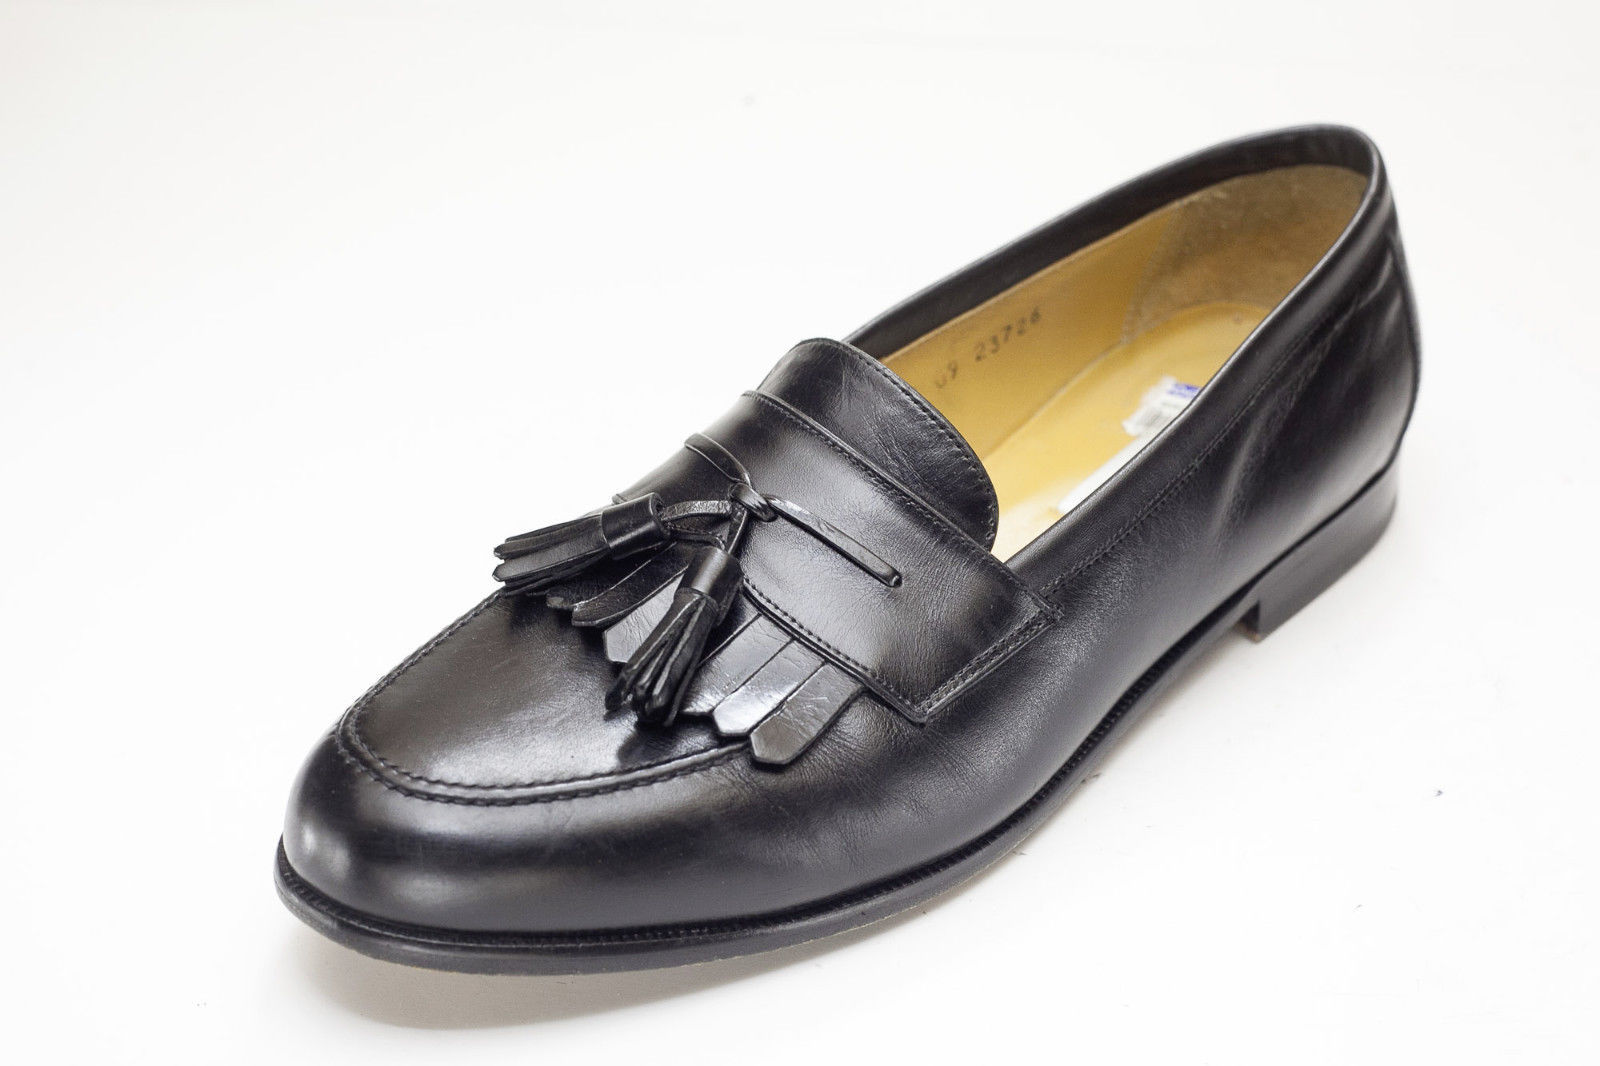 Mezlan 11 Black Tassel Loafers Men's Dress Shoes - Dress/Formal